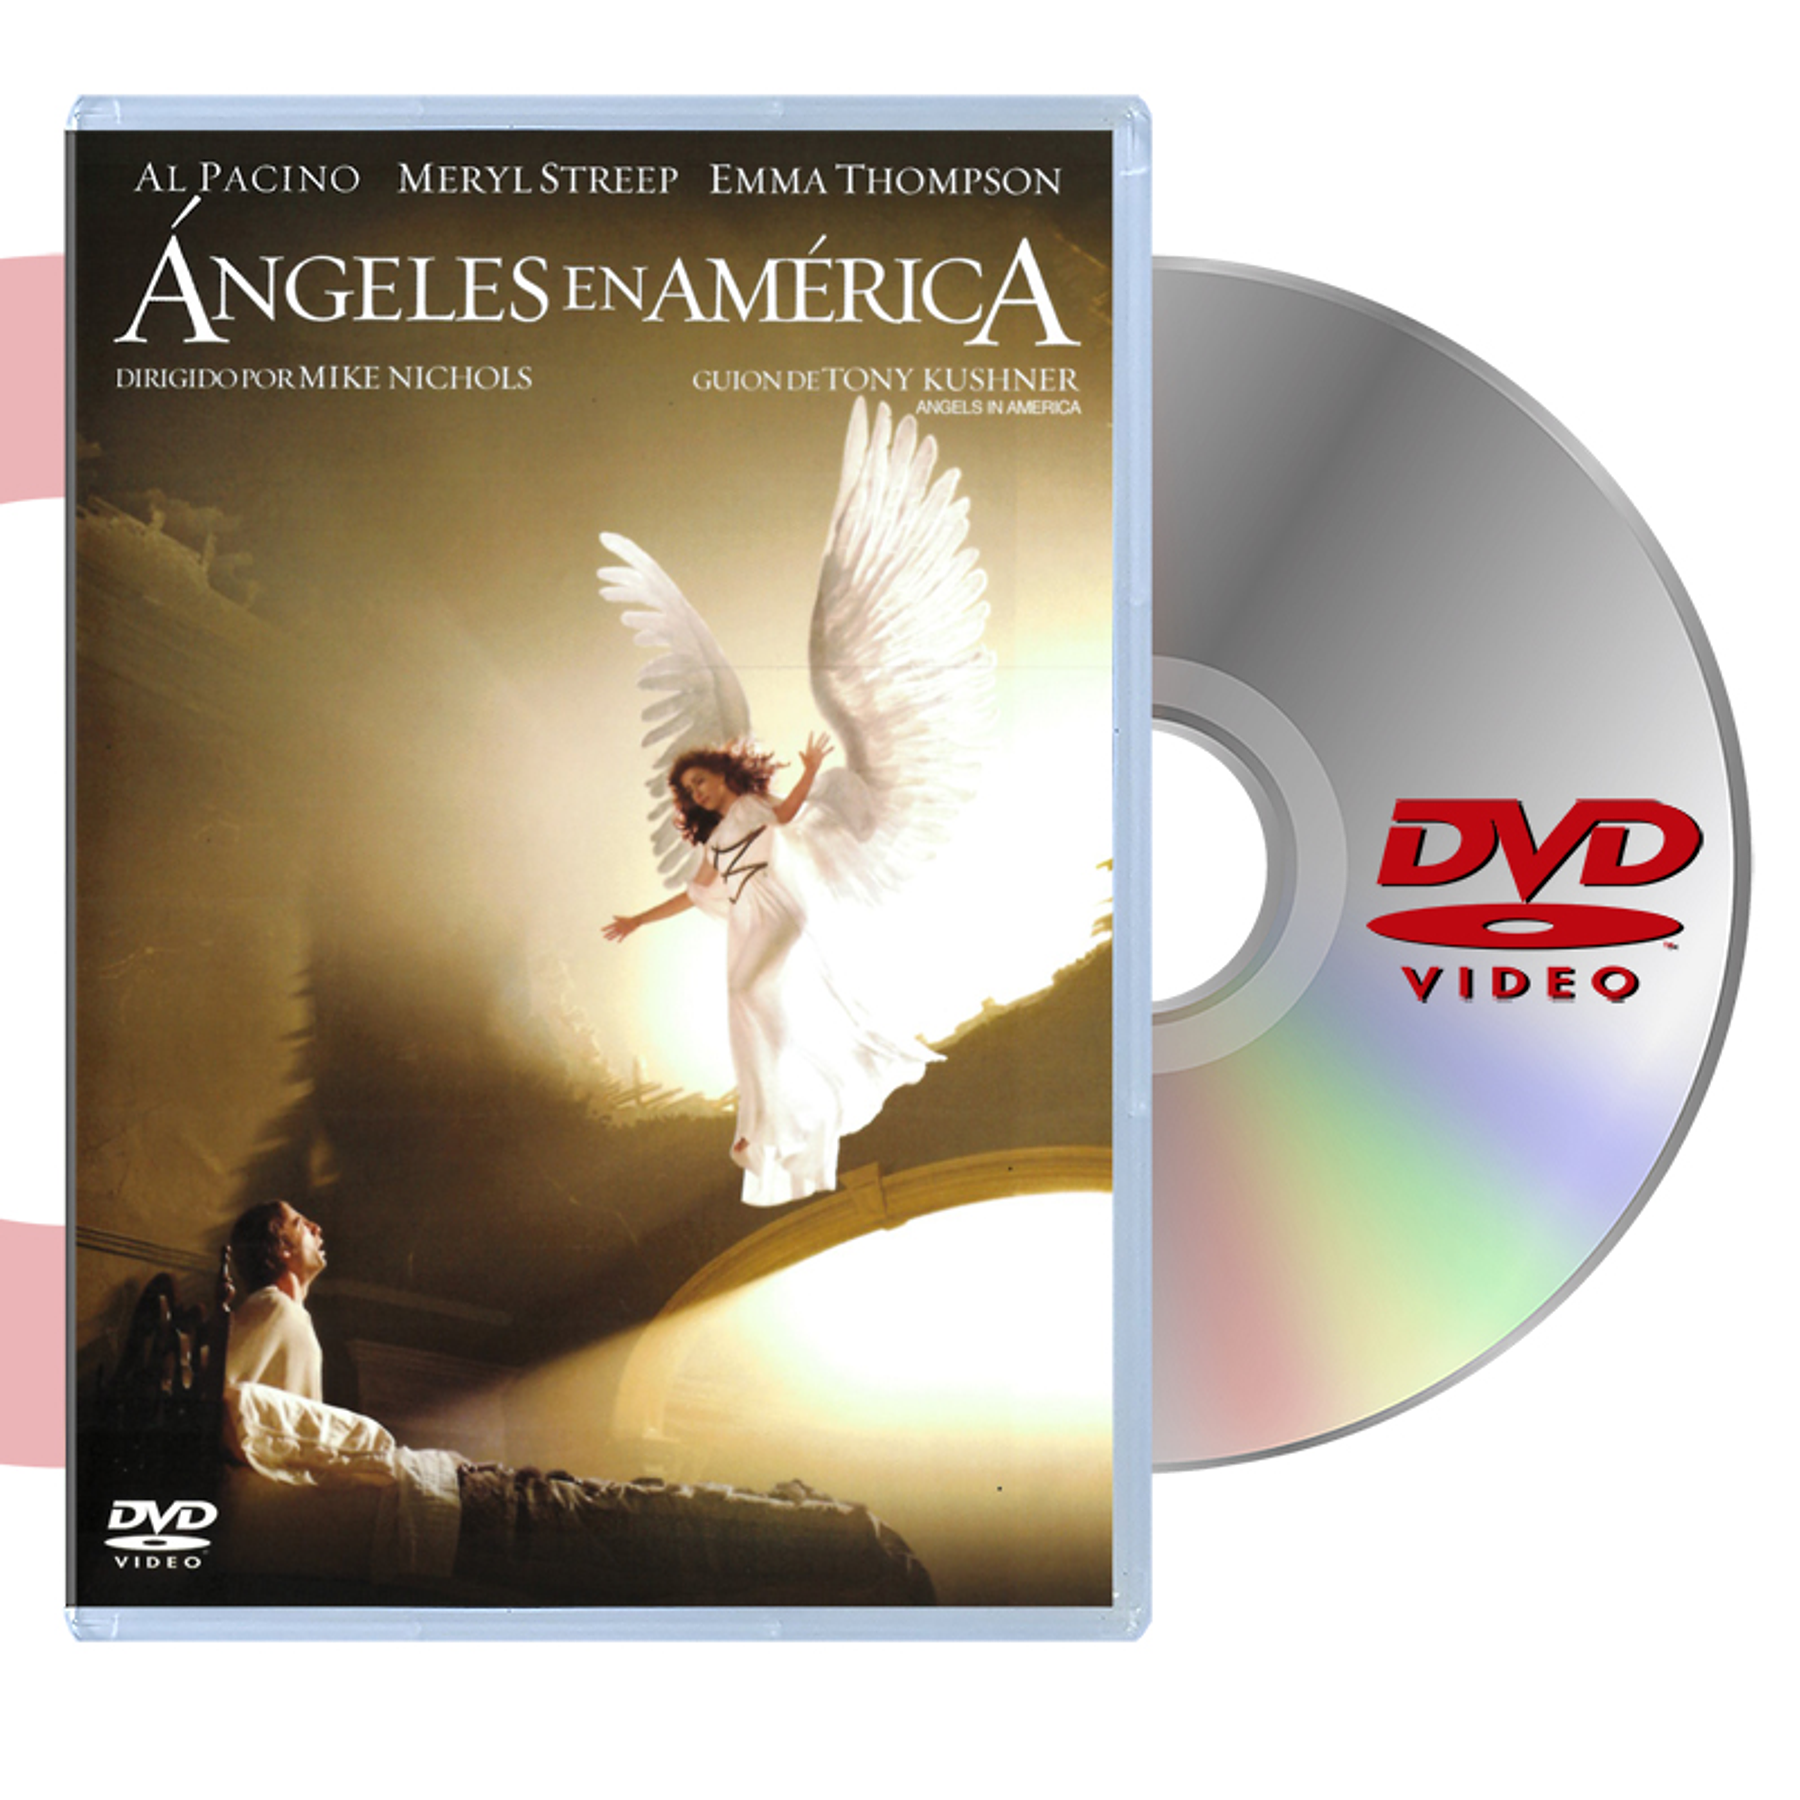 DVD ANGELES EN AMERICA